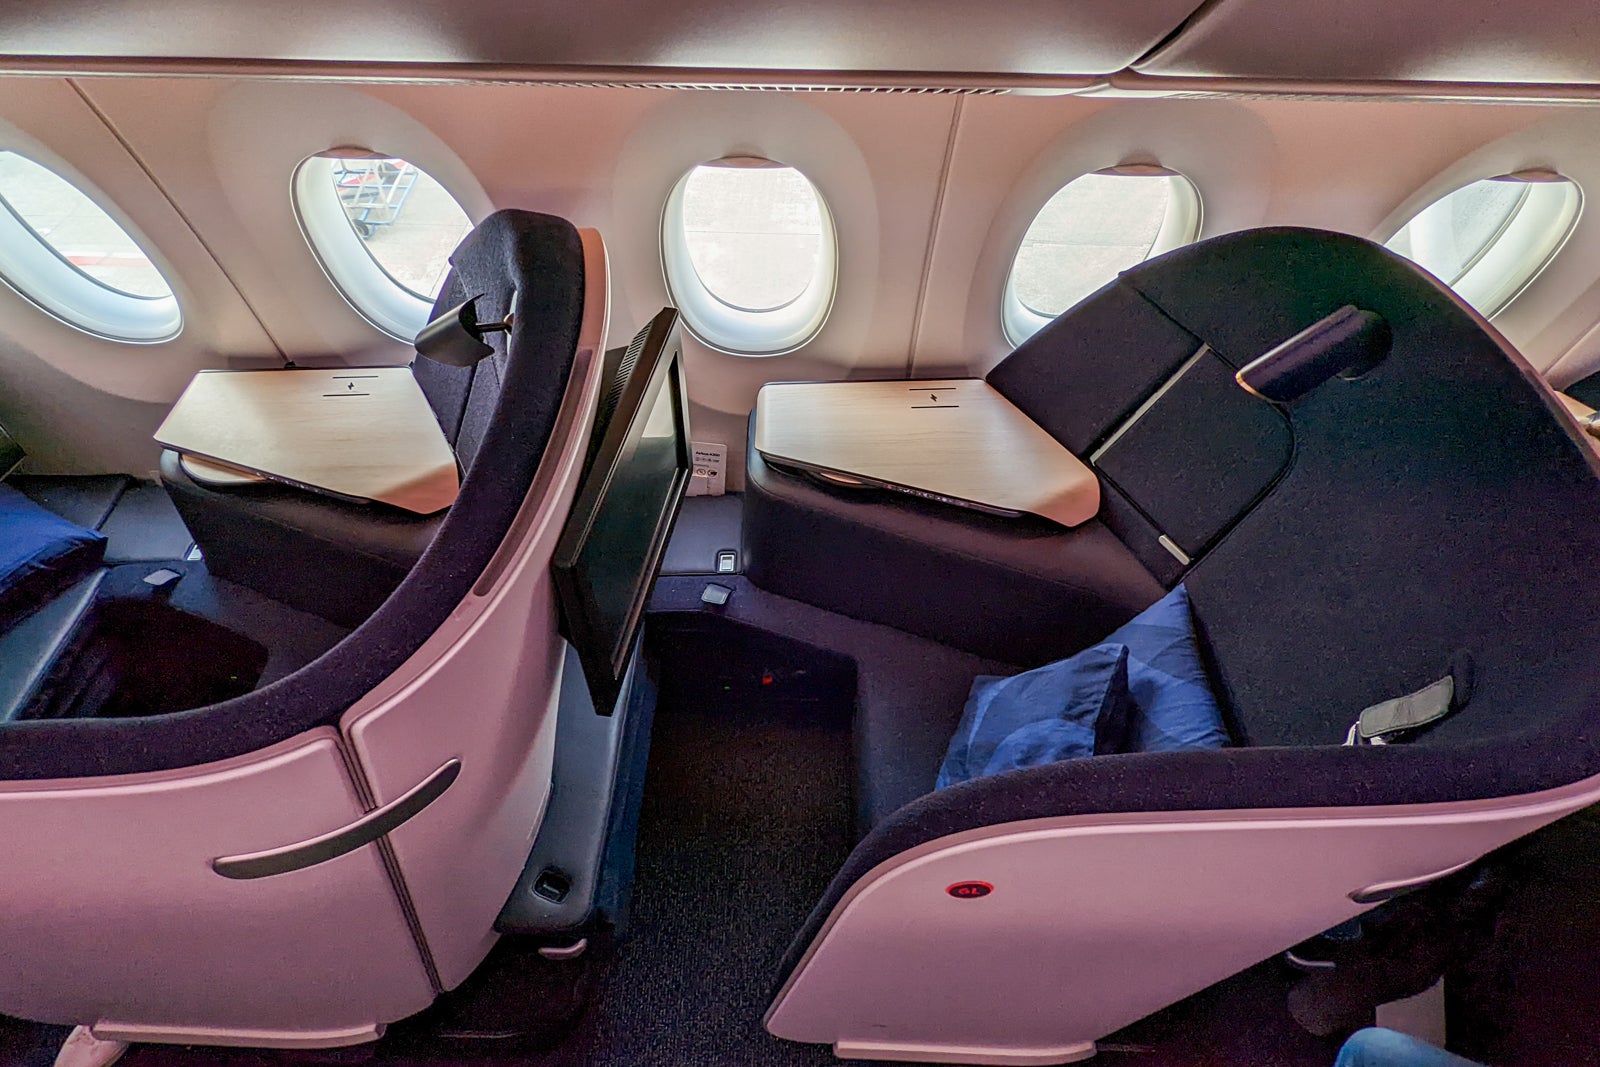 seats on plane